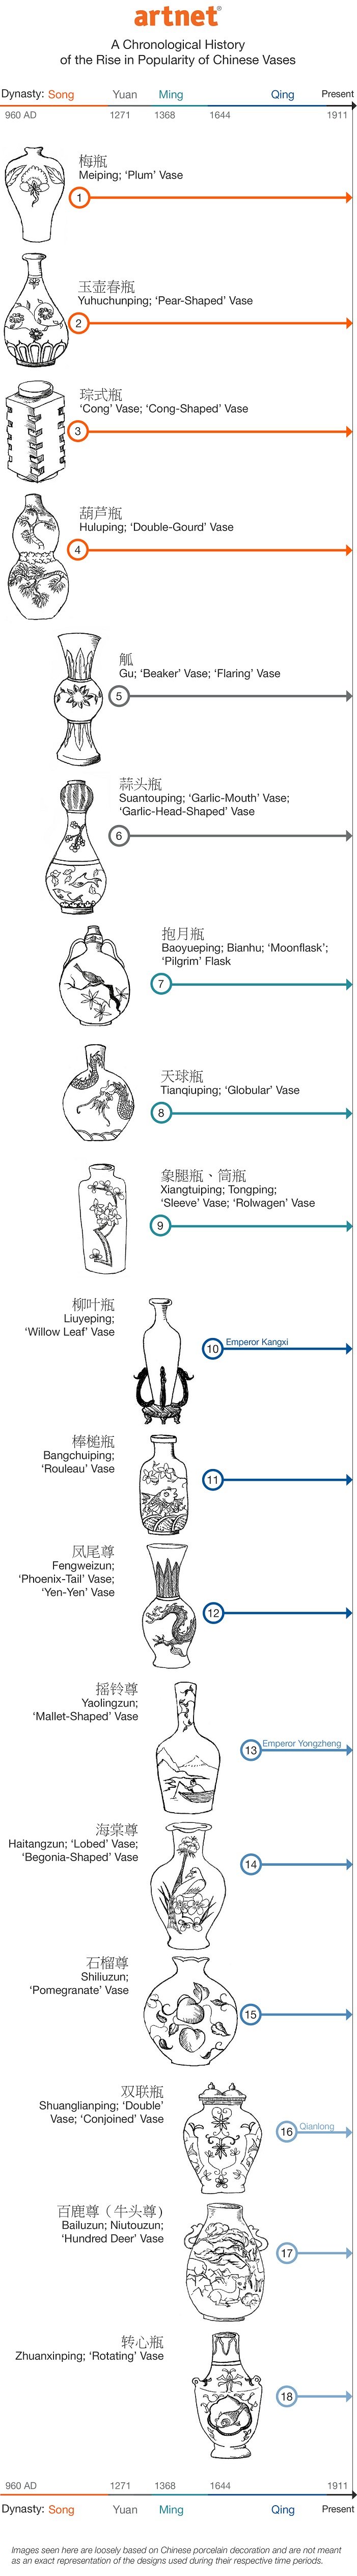 Chinese Vase infographic